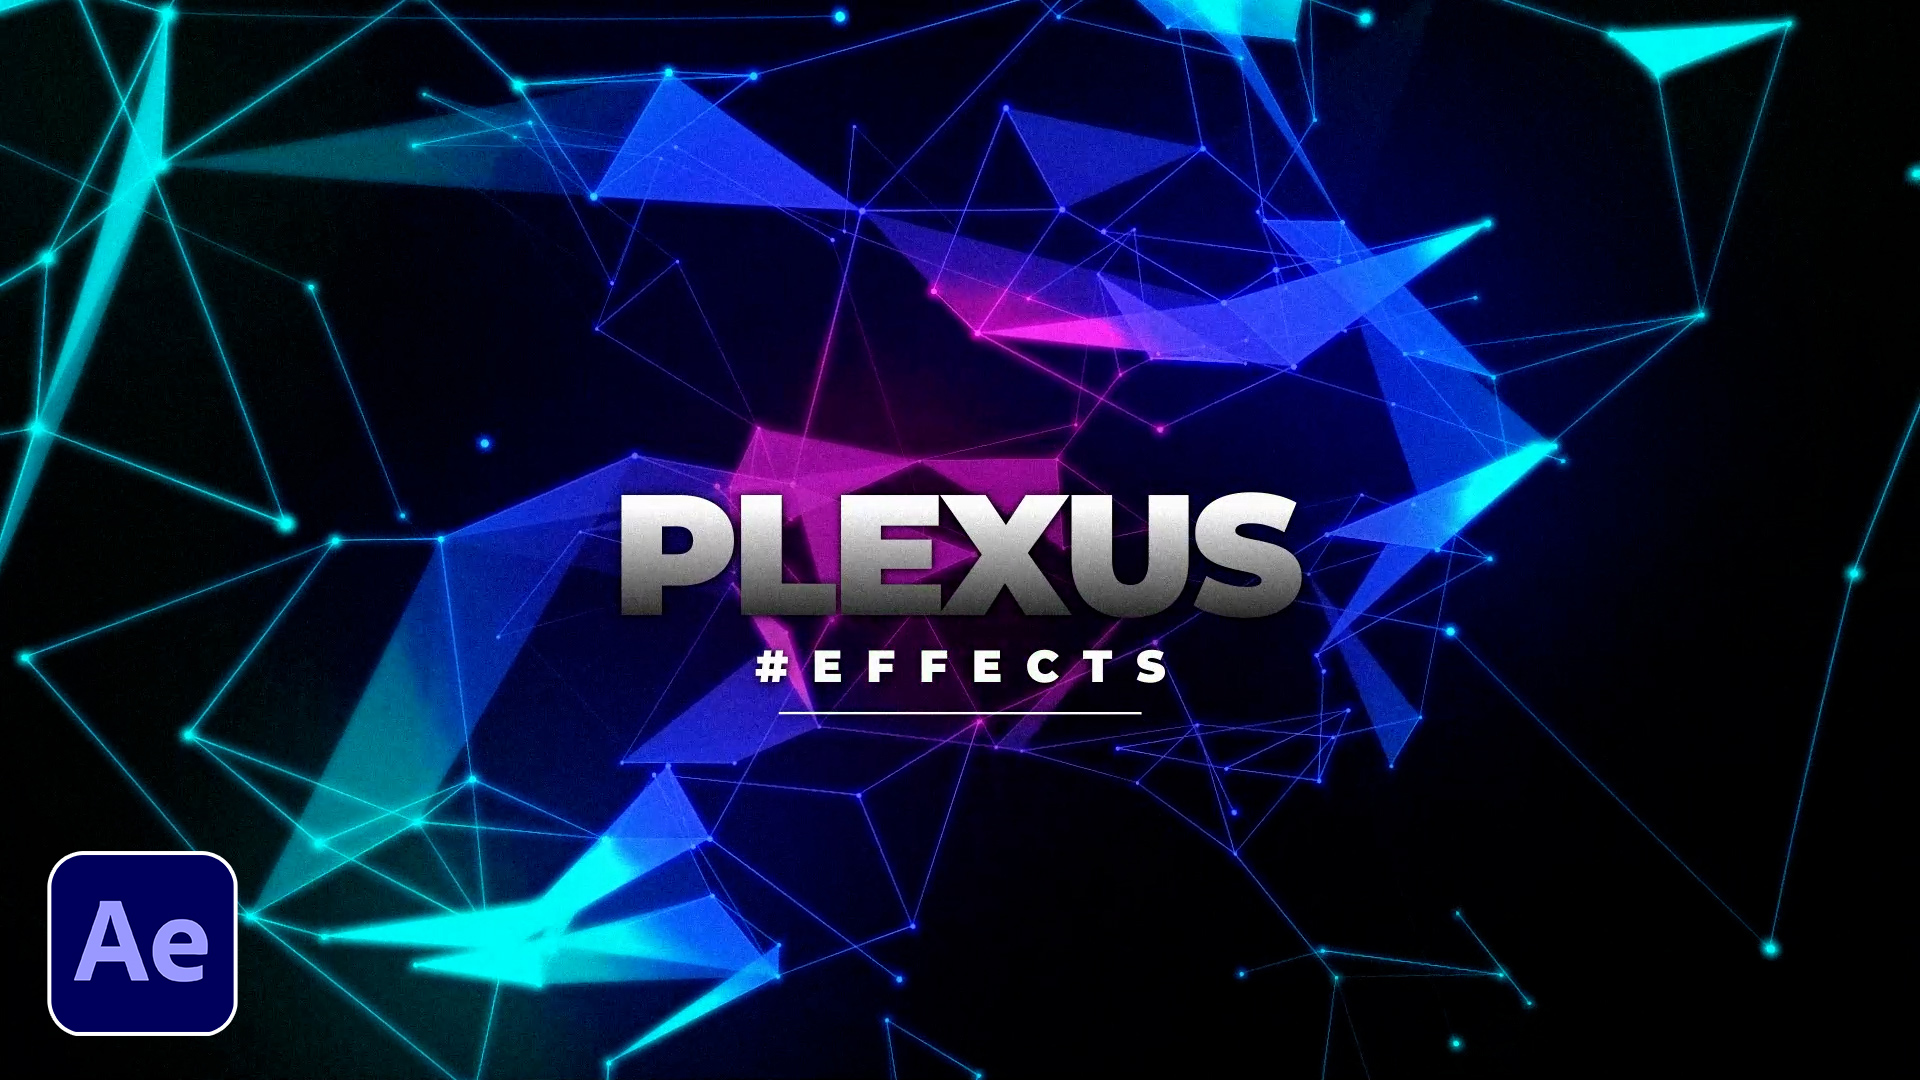 plexus after effects cc 2018 download